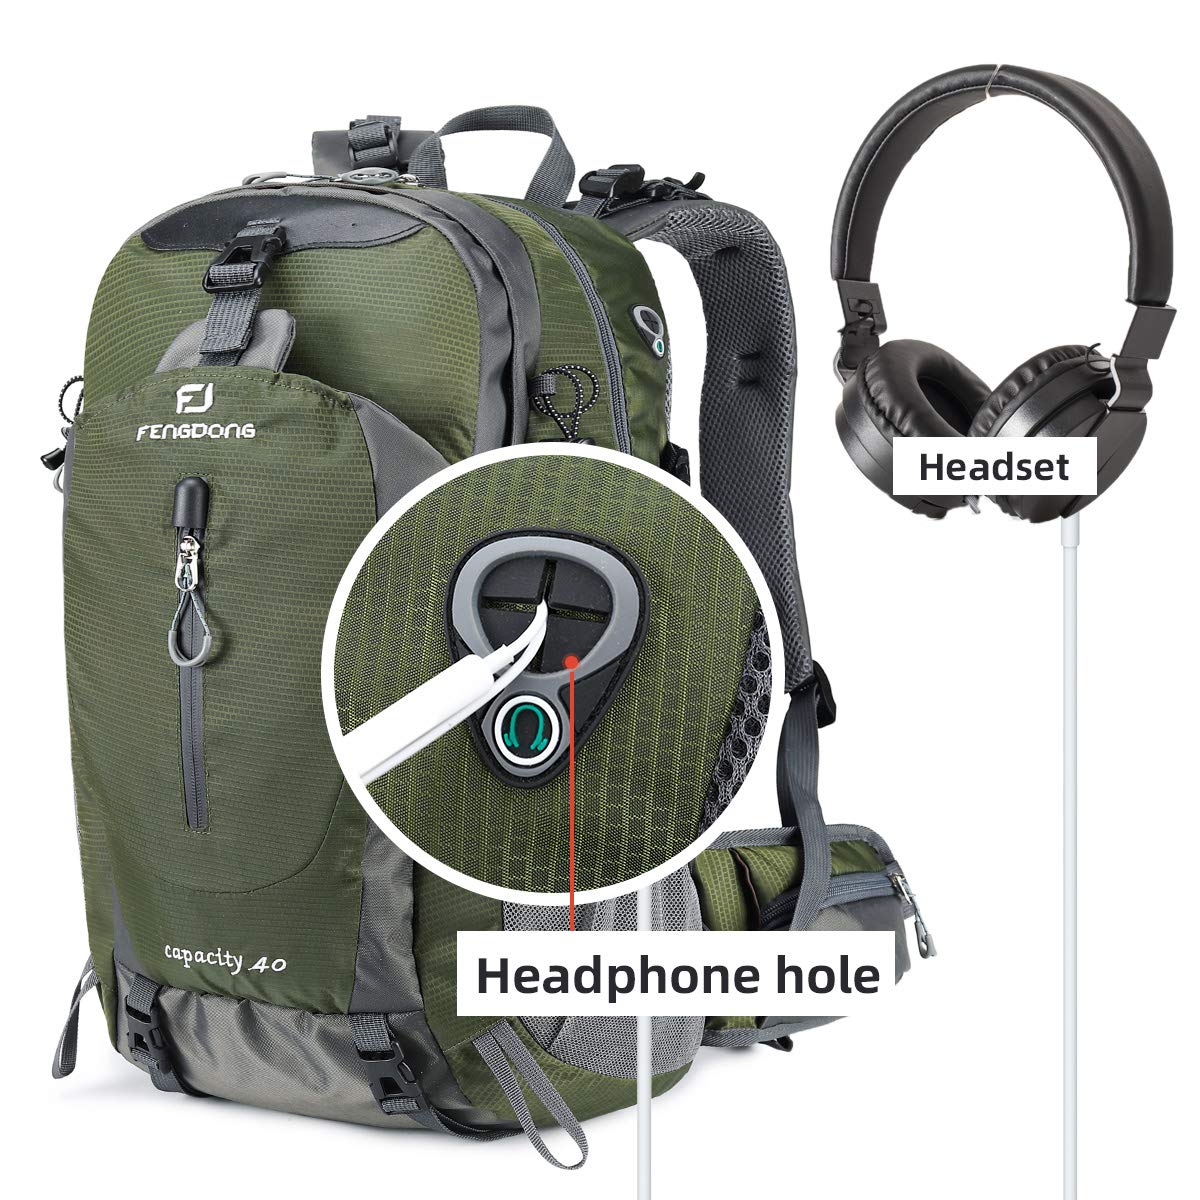 FENGDONG 40L Waterproof Lightweight Hiking,Camping,Travel Backpack for Men Women